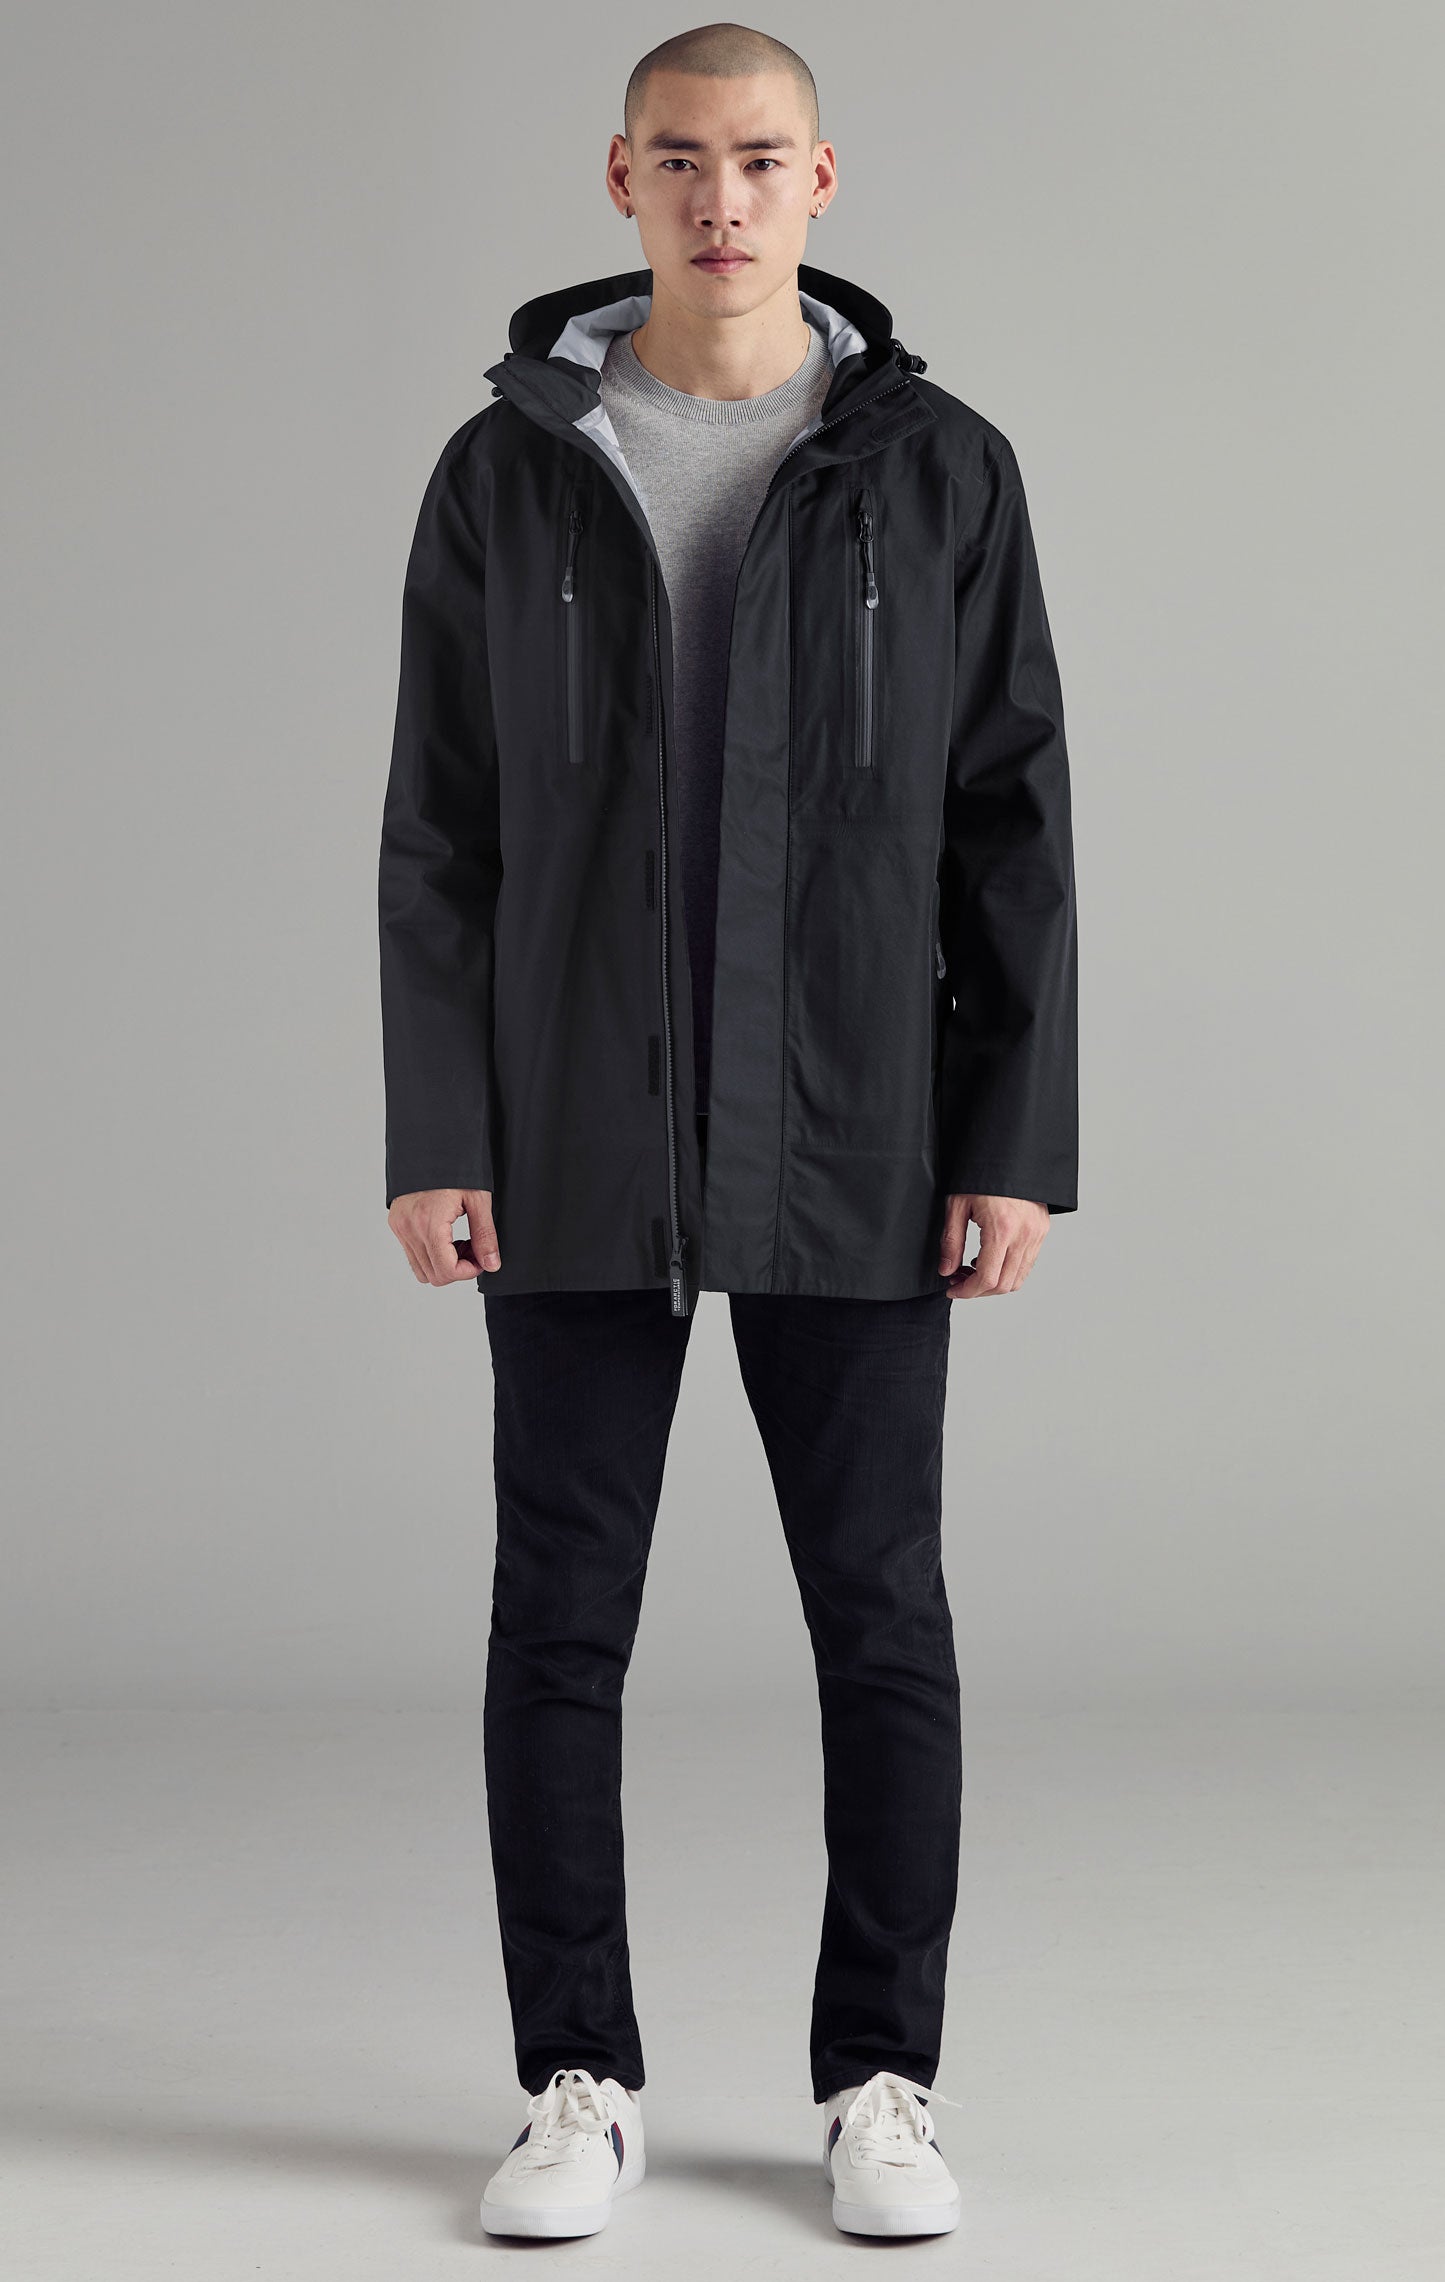 Huk Gunwale Rain Jacket H4000058 - Choose Size / Color